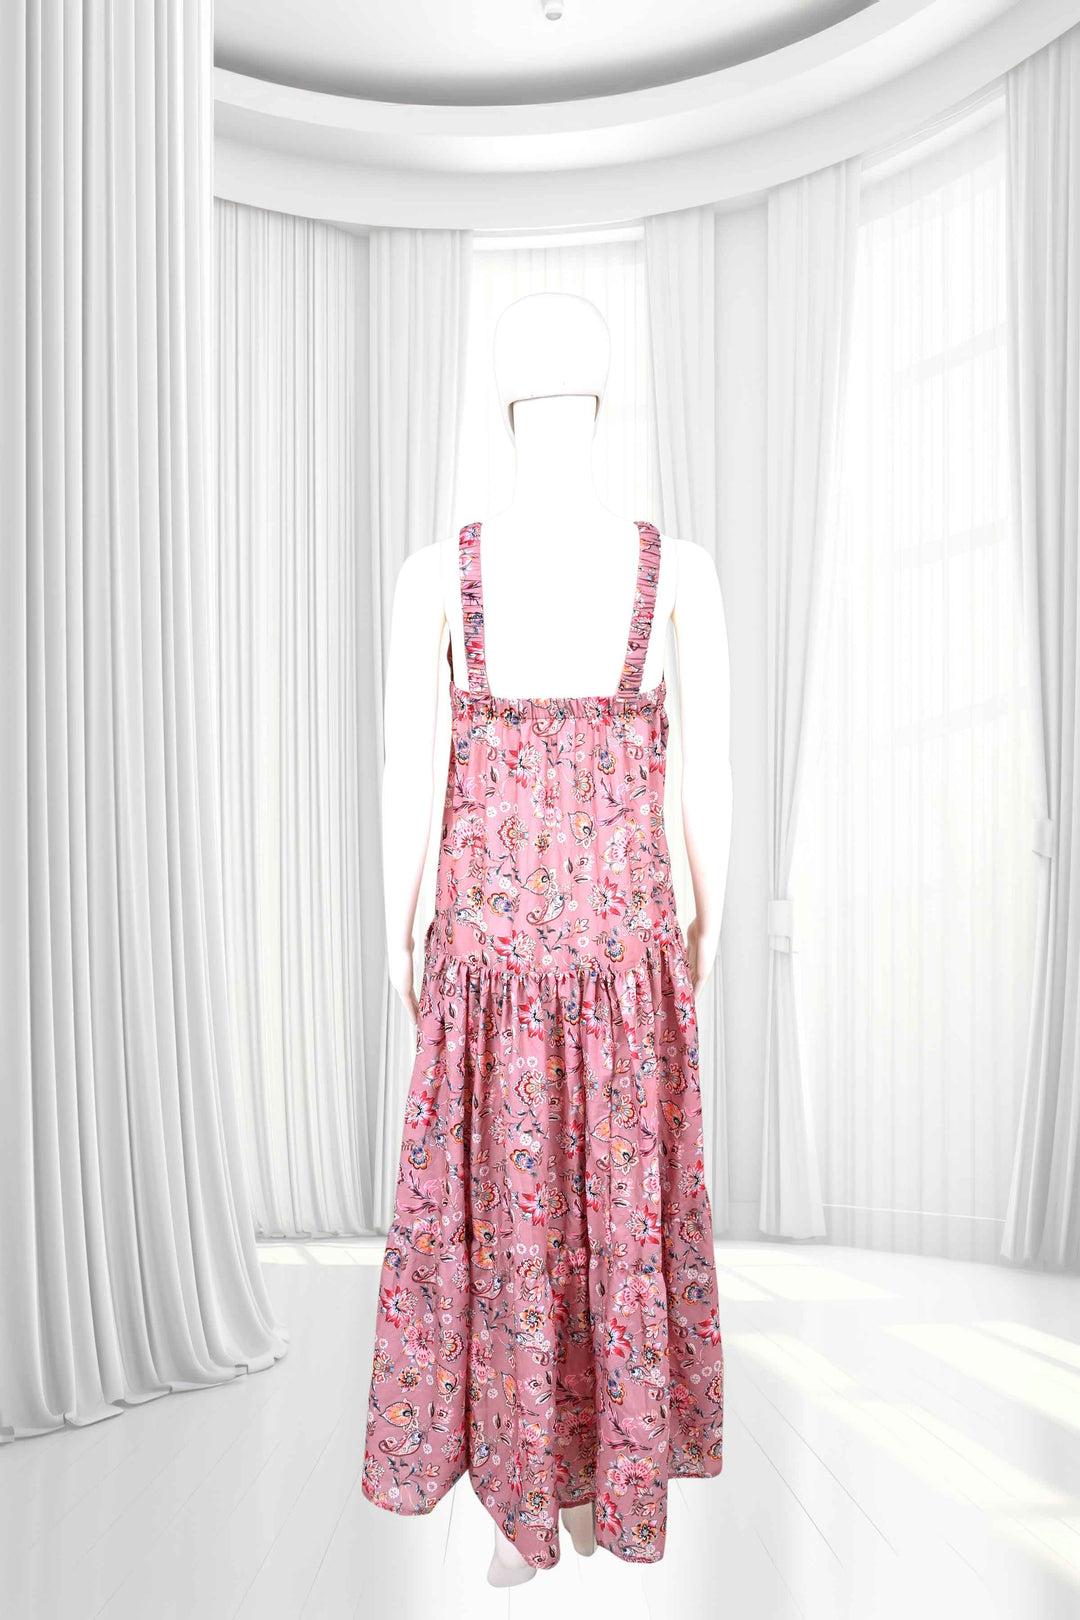 backless pink maxi dress